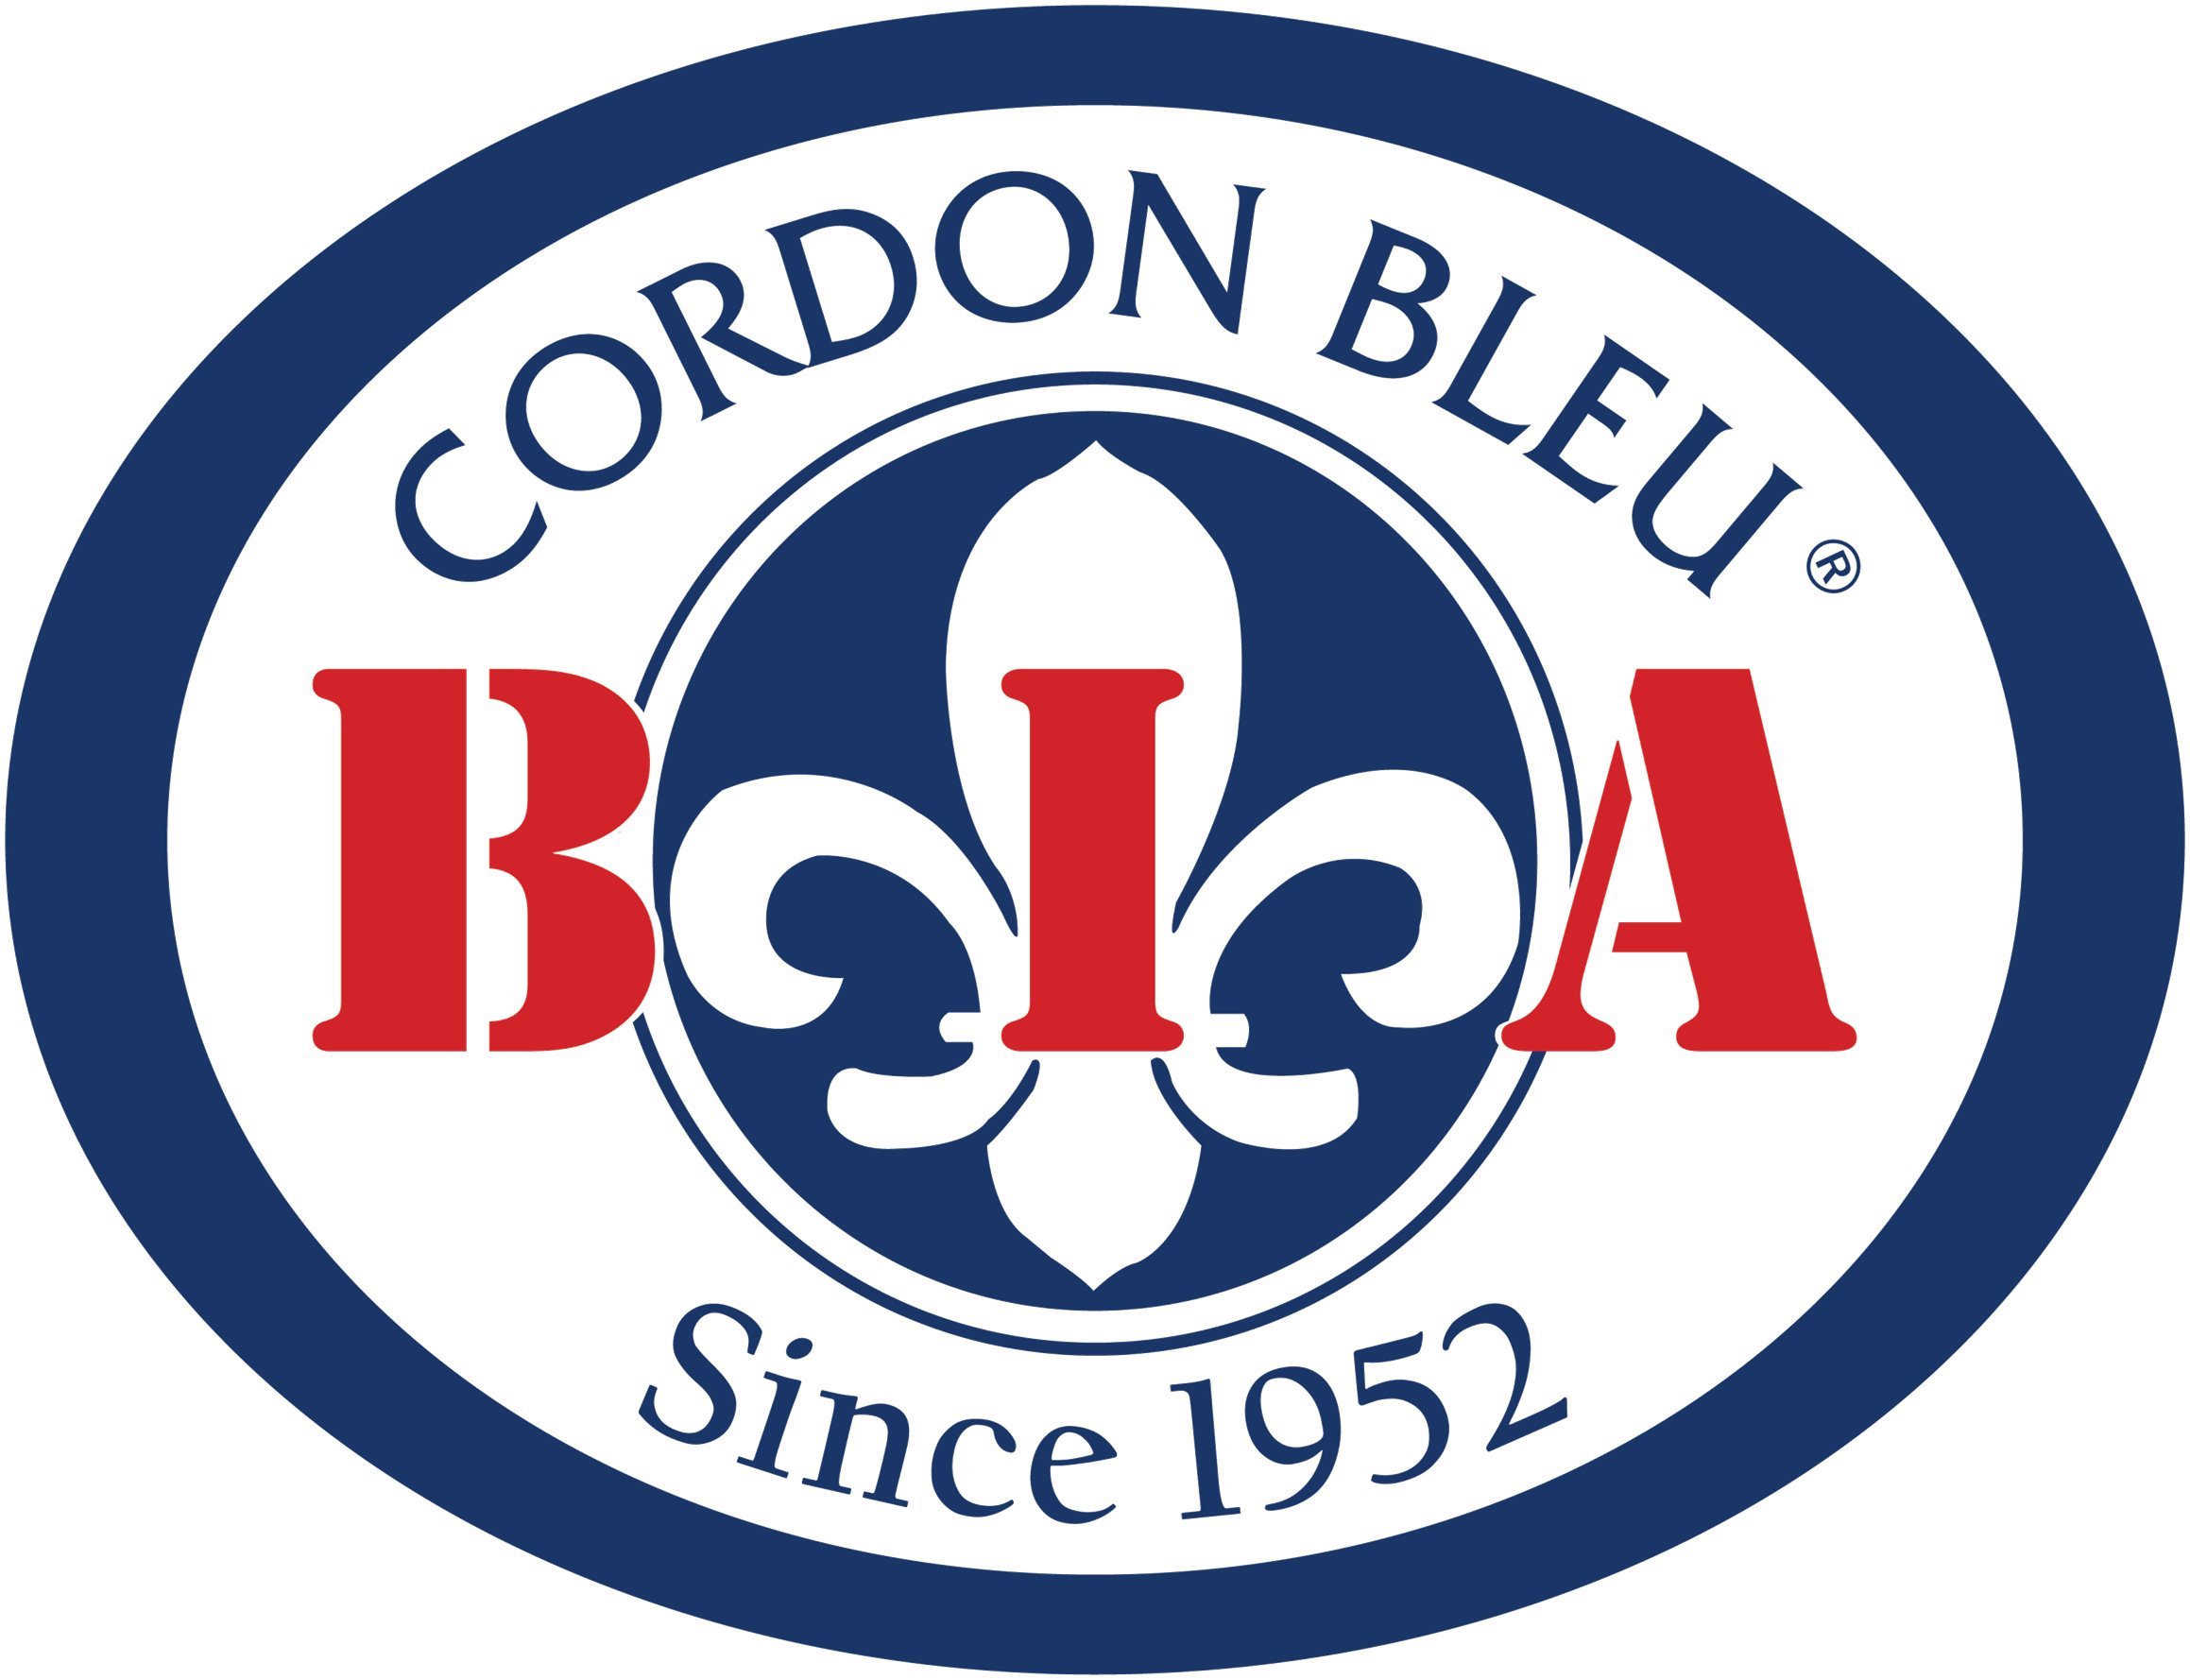 BIA Cordon Rectangular 12.25" x 5" Serving Tray, Set of 2, White